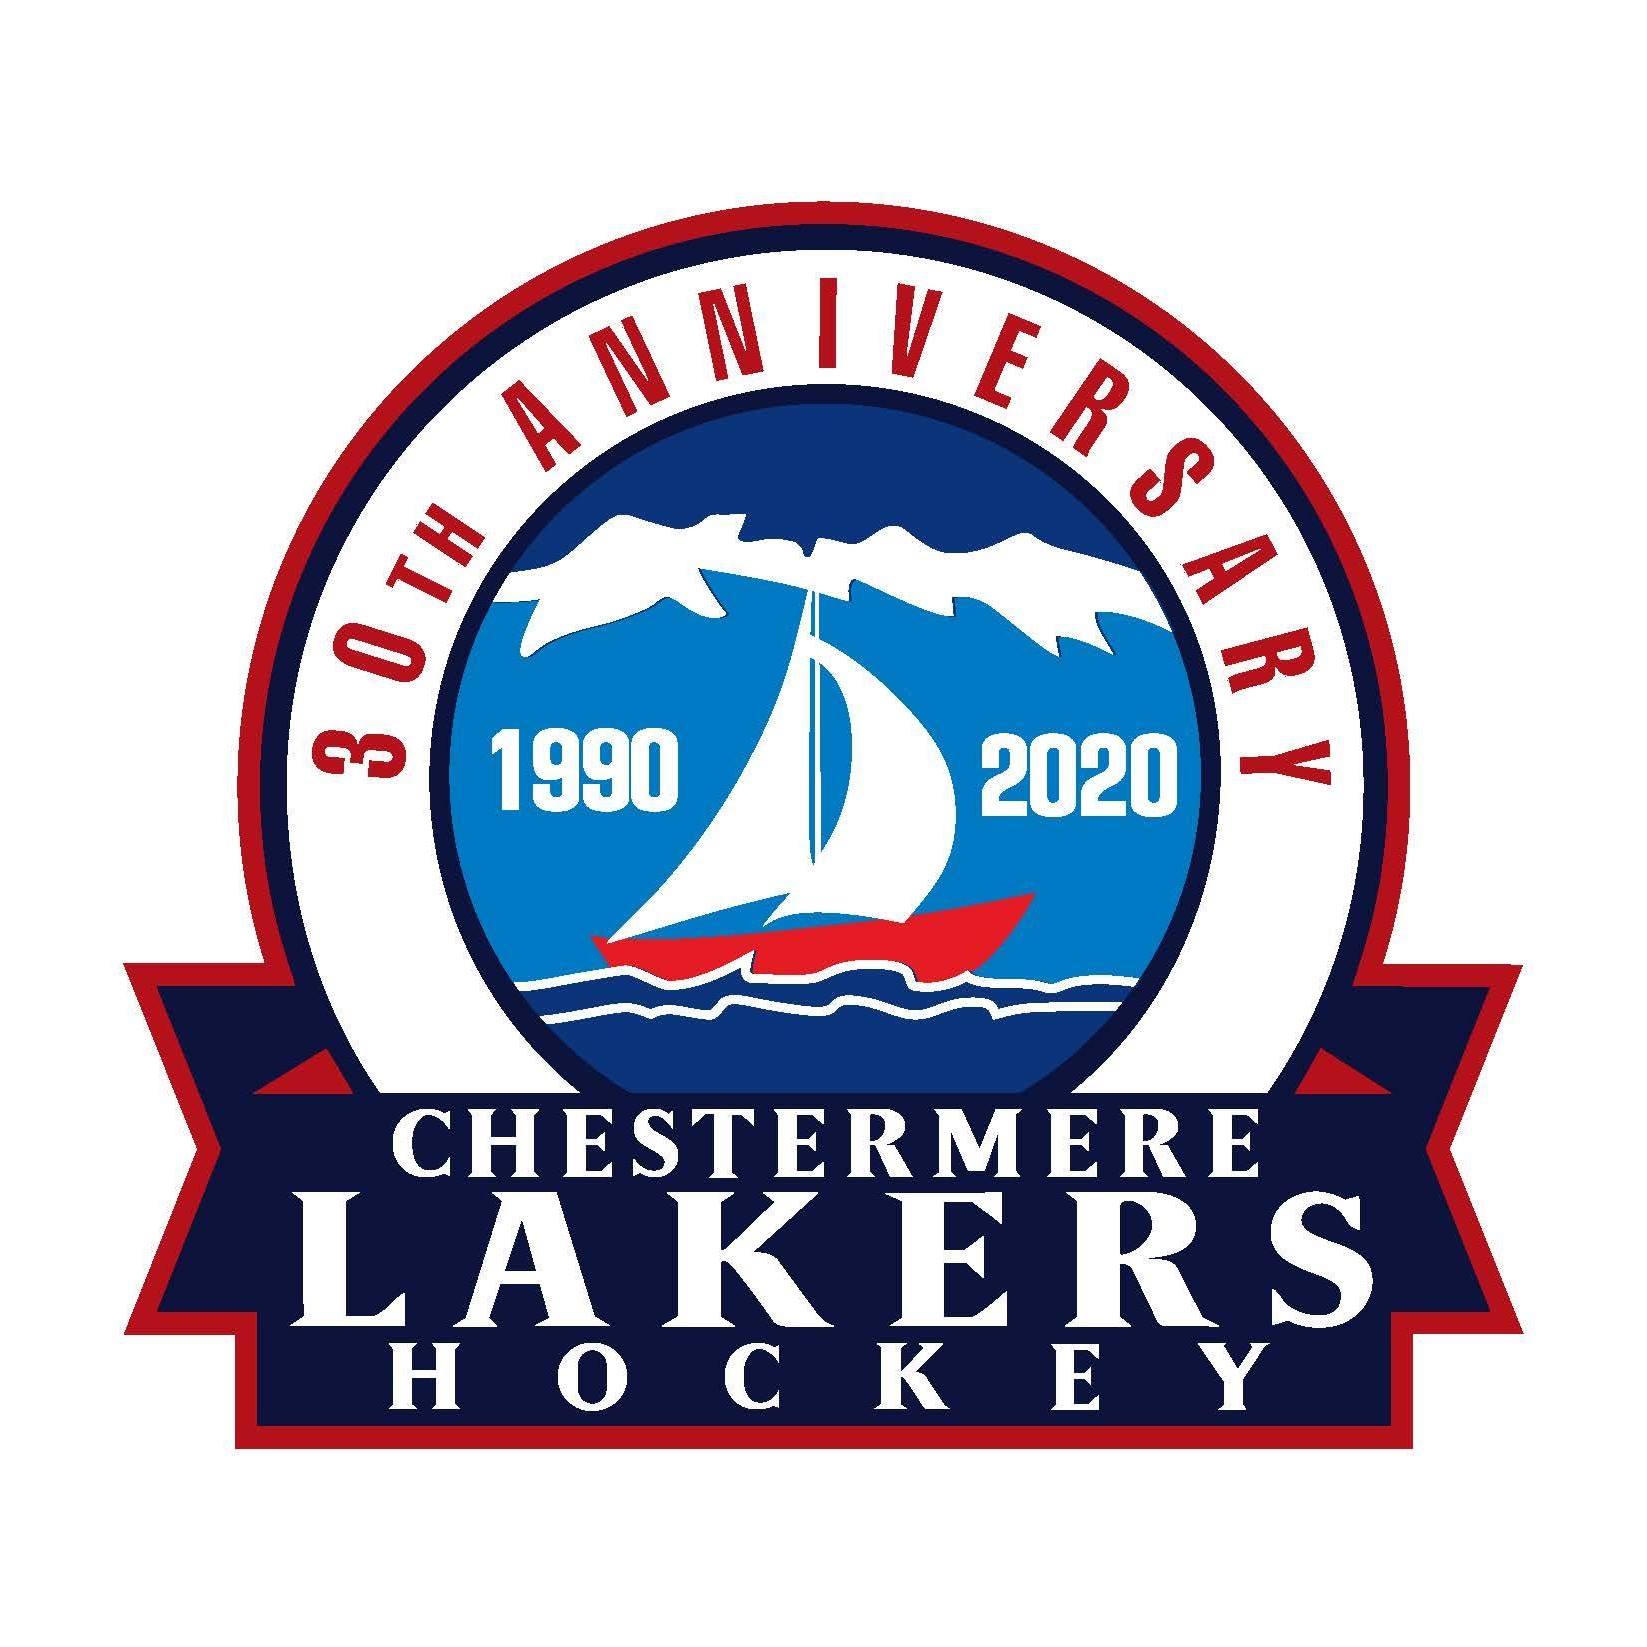 Chestermere Minor Hockey Association